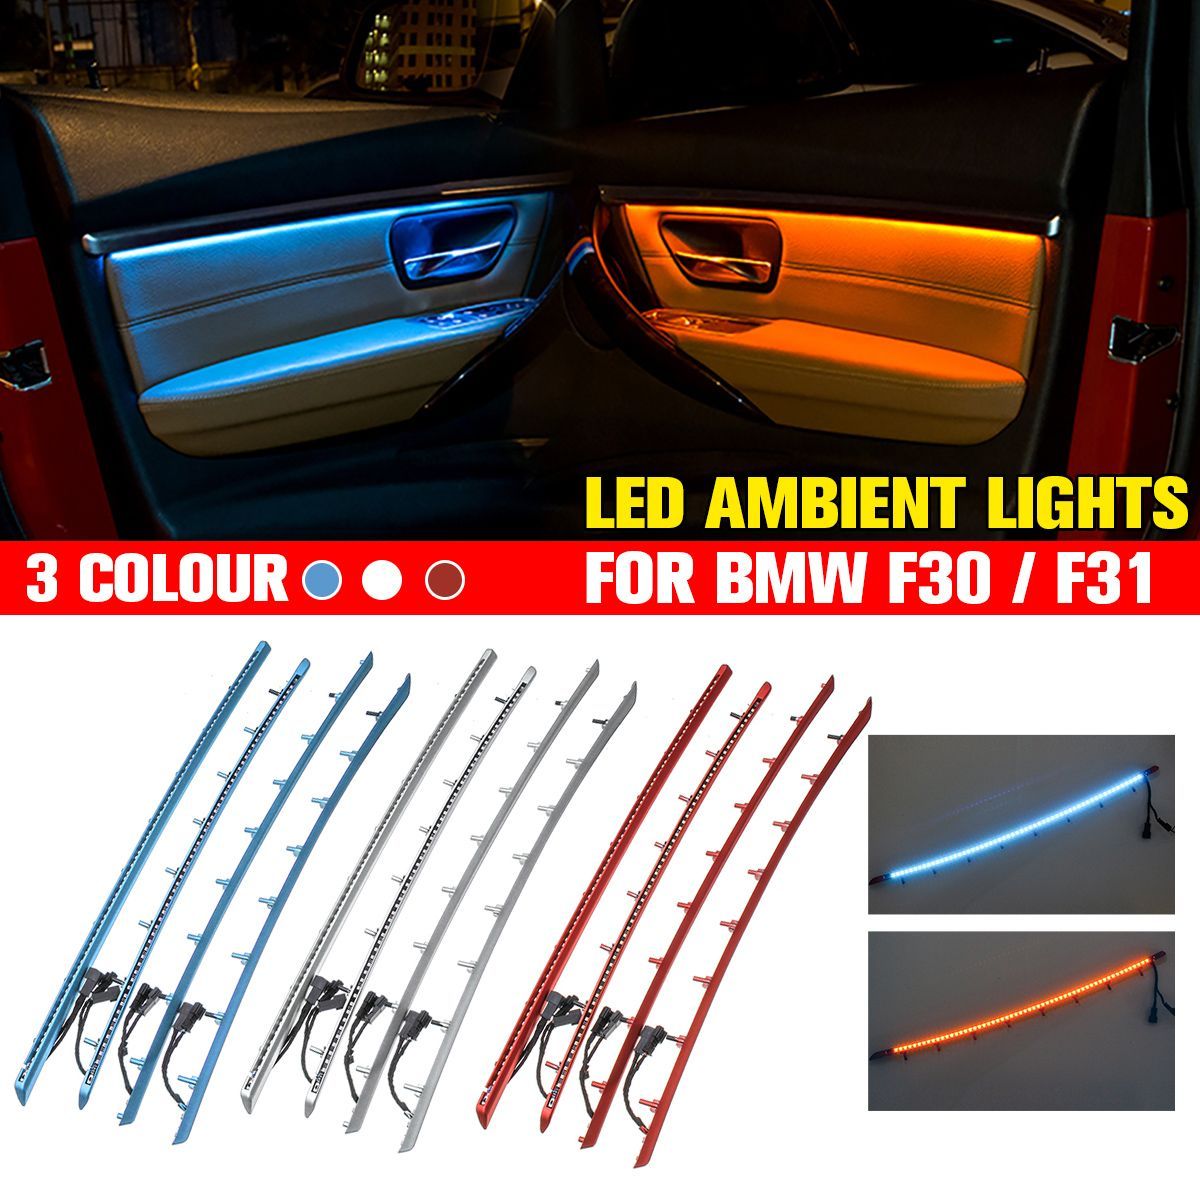 Illuminated-LED-Interior-Car-Door-Atmosphere-Light-Decoration-Ambient-Lamp-Set-For-BMW-F30-F31-1713623